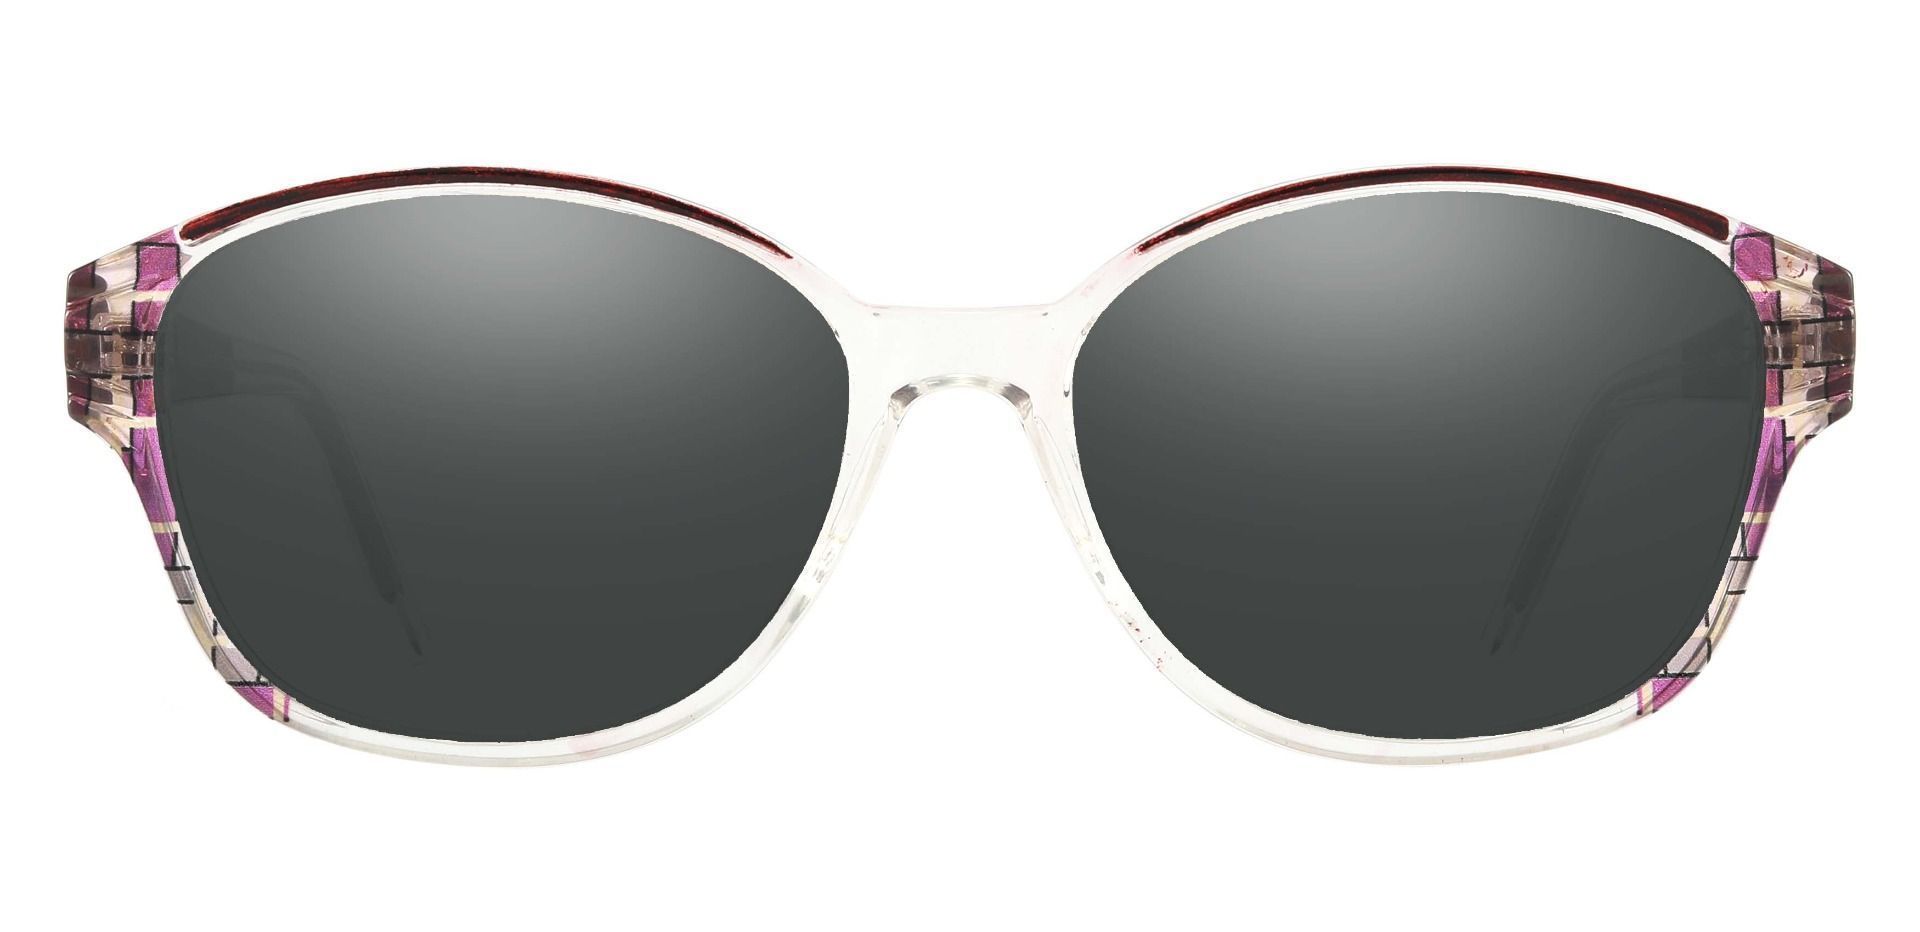 Moira Oval Progressive Sunglasses - Pink Frame With Gray Lenses